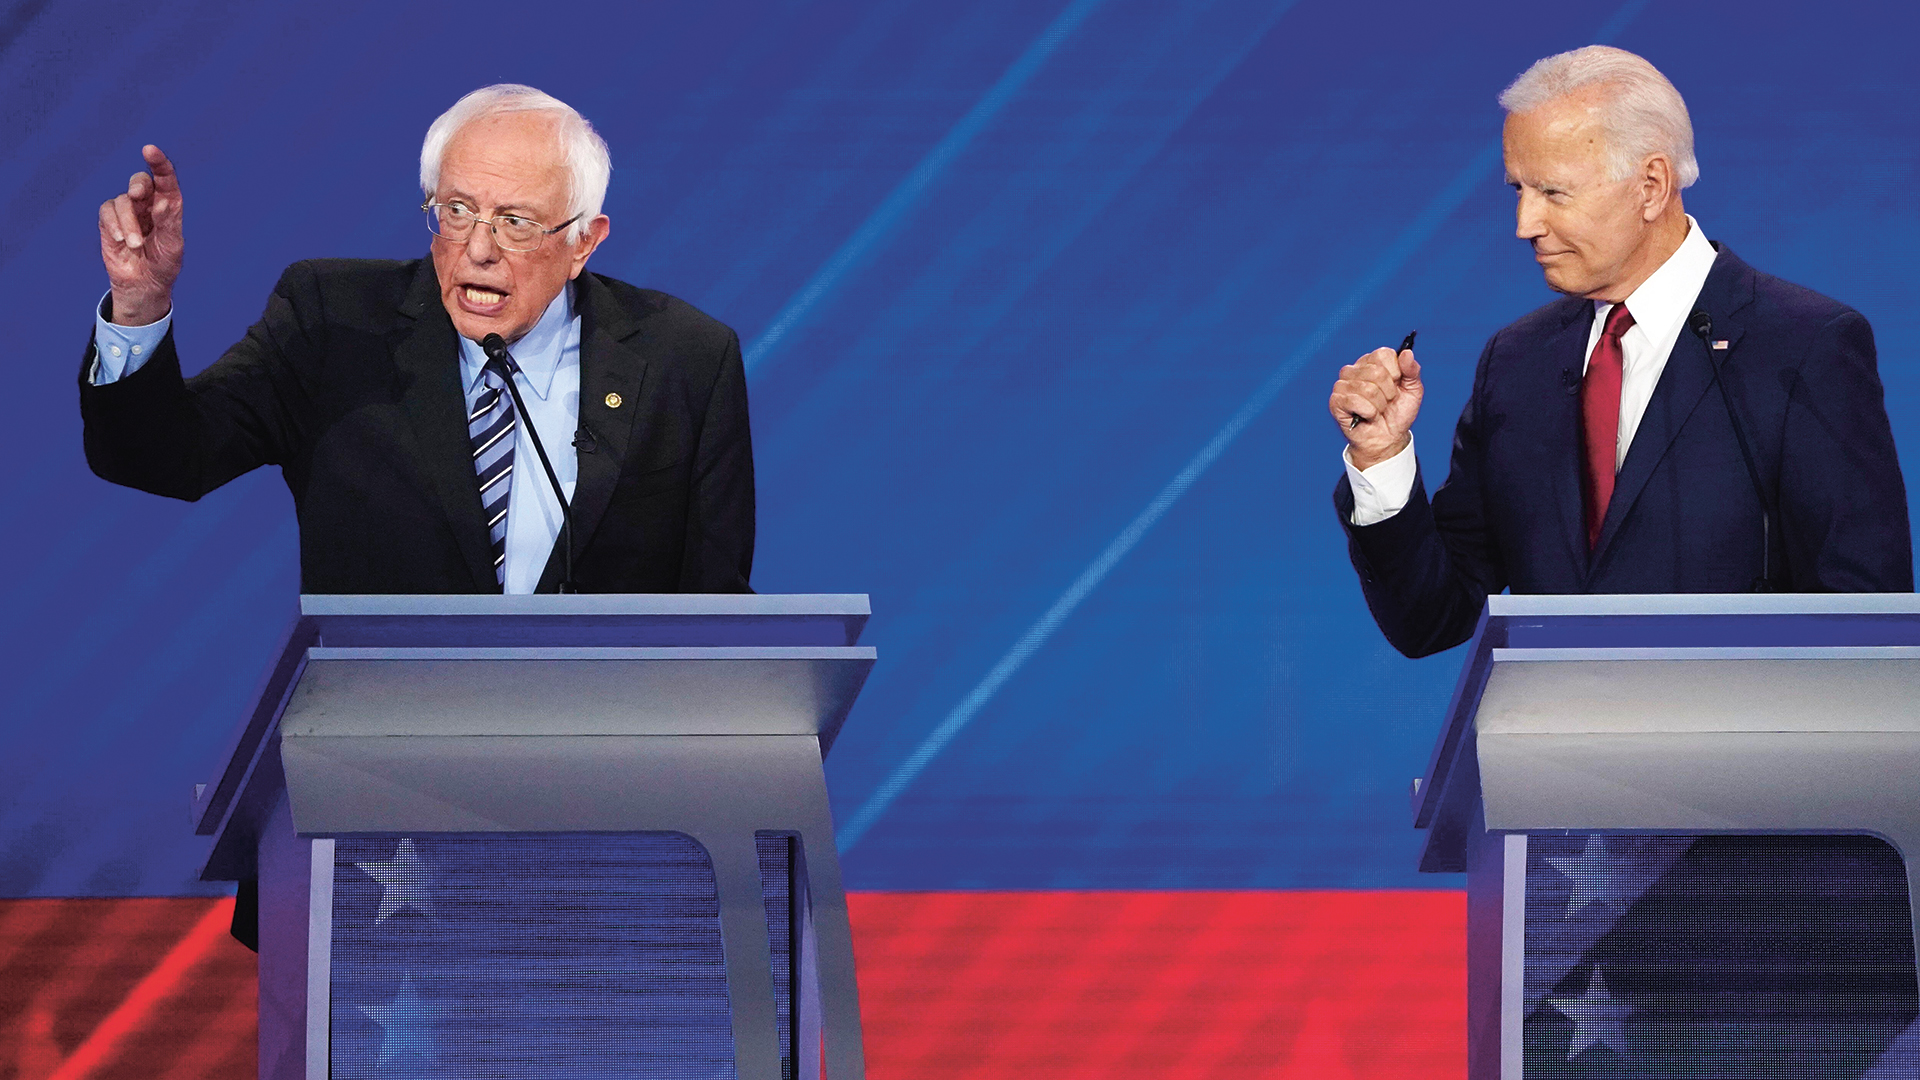 Bernie Sanders and Joe Biden in the fight for democracy